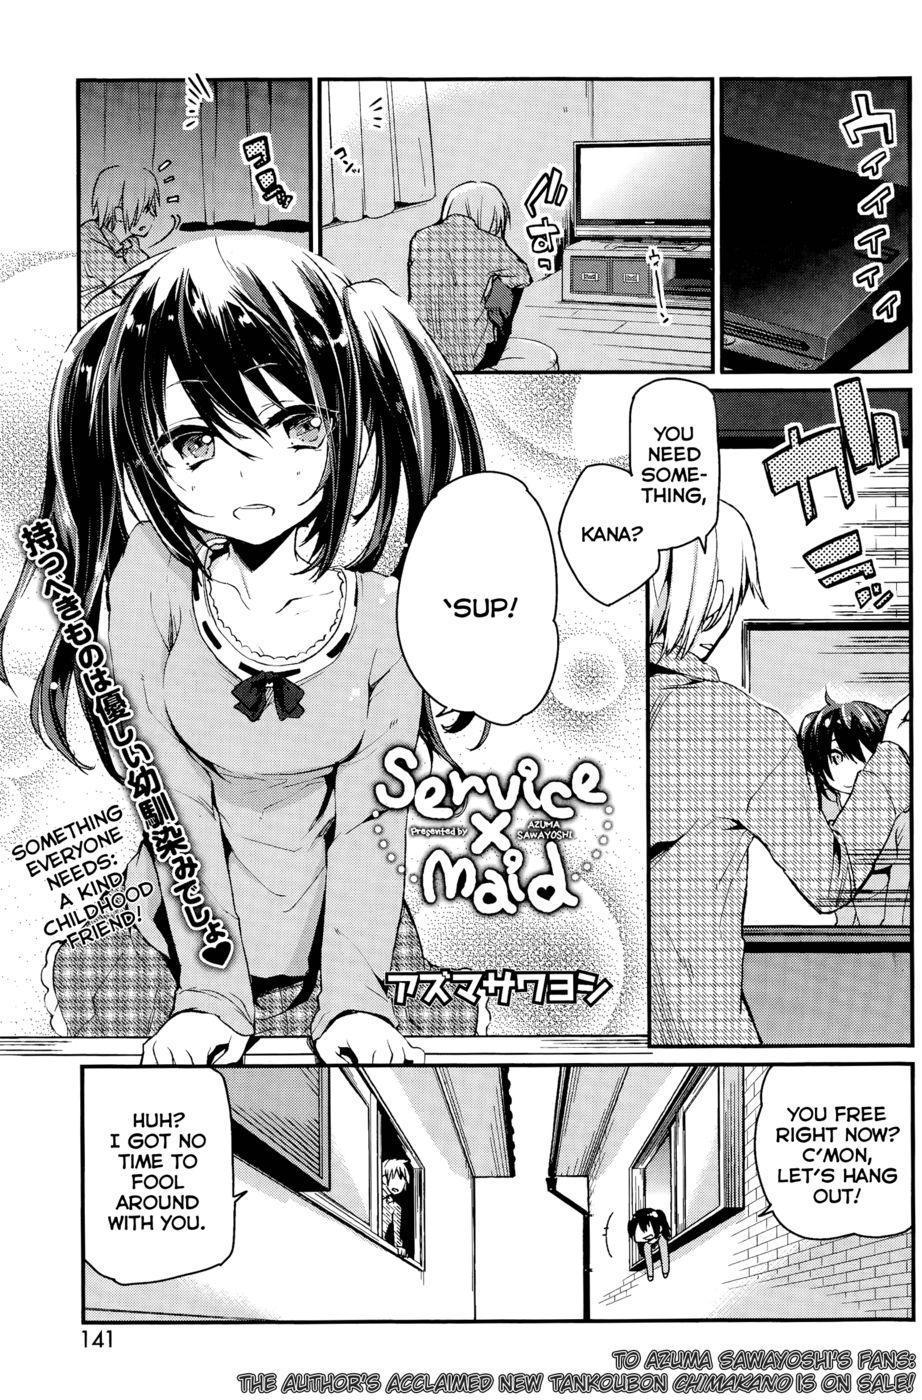 Hentai Manga Comic-Service x Maid-Read-1